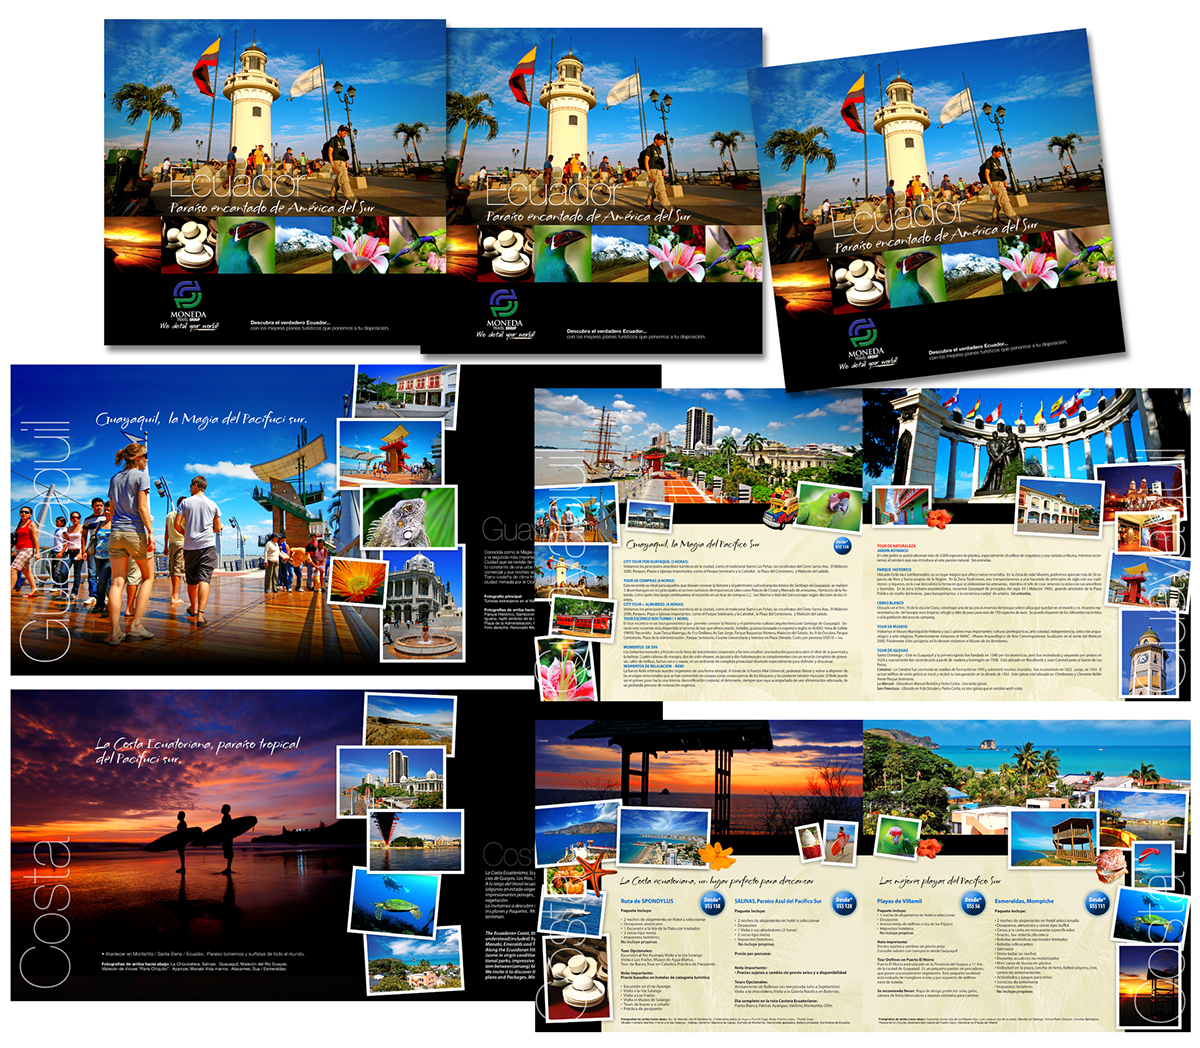 Travel Ecuador guayaquil Galapagos Amazon Coast adventure folleto brochure revista